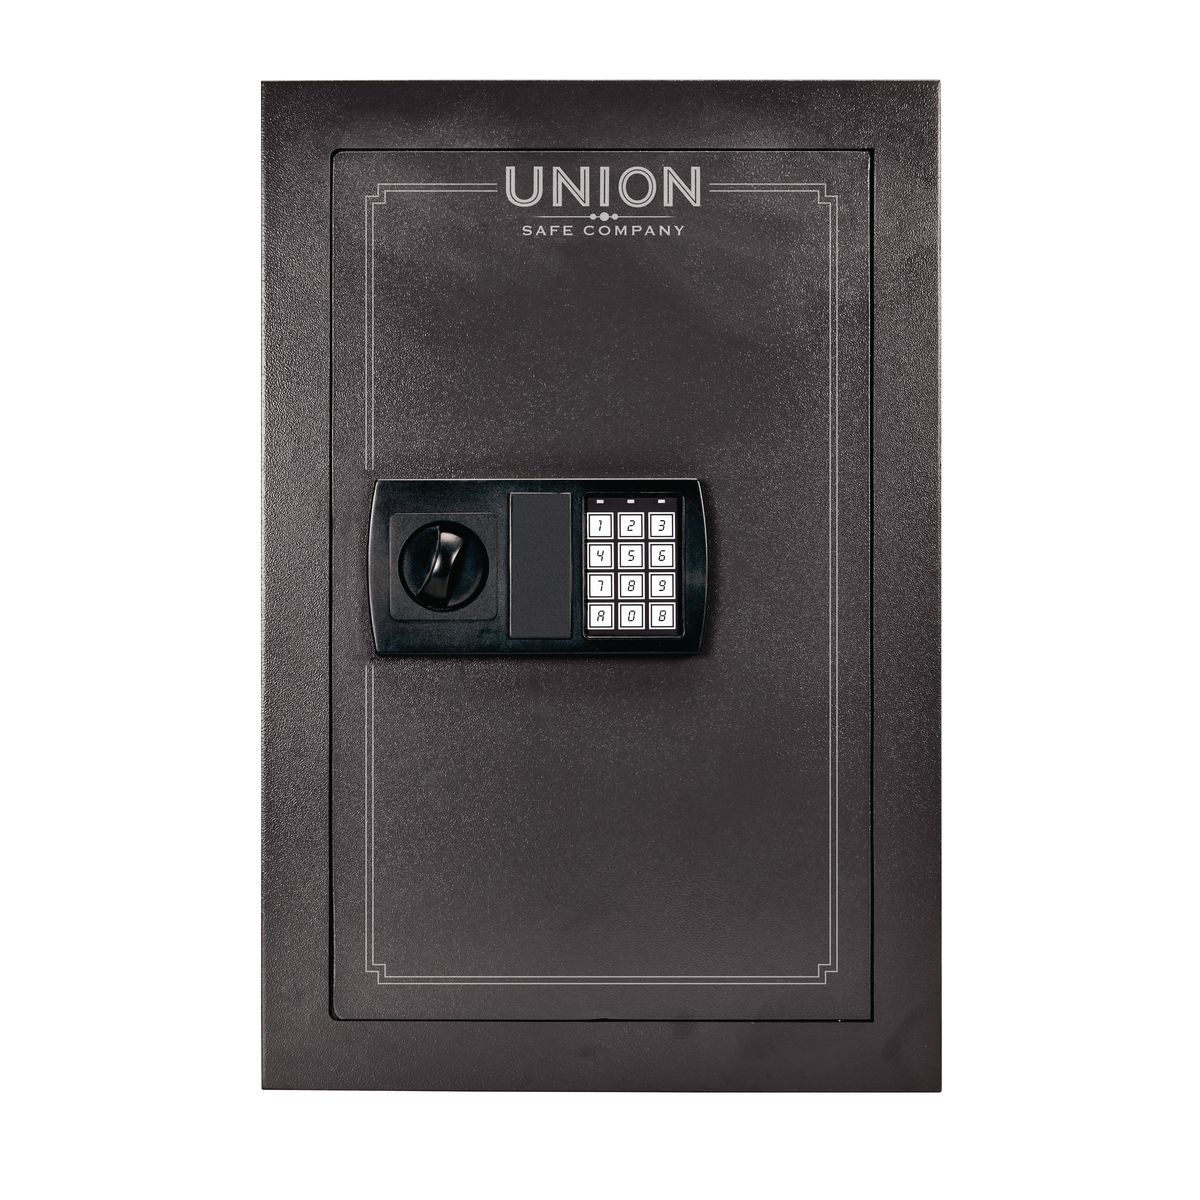 UNION SAFE COMPANY 0.53 cu. ft. Electronic Wall Safe – Item 62983